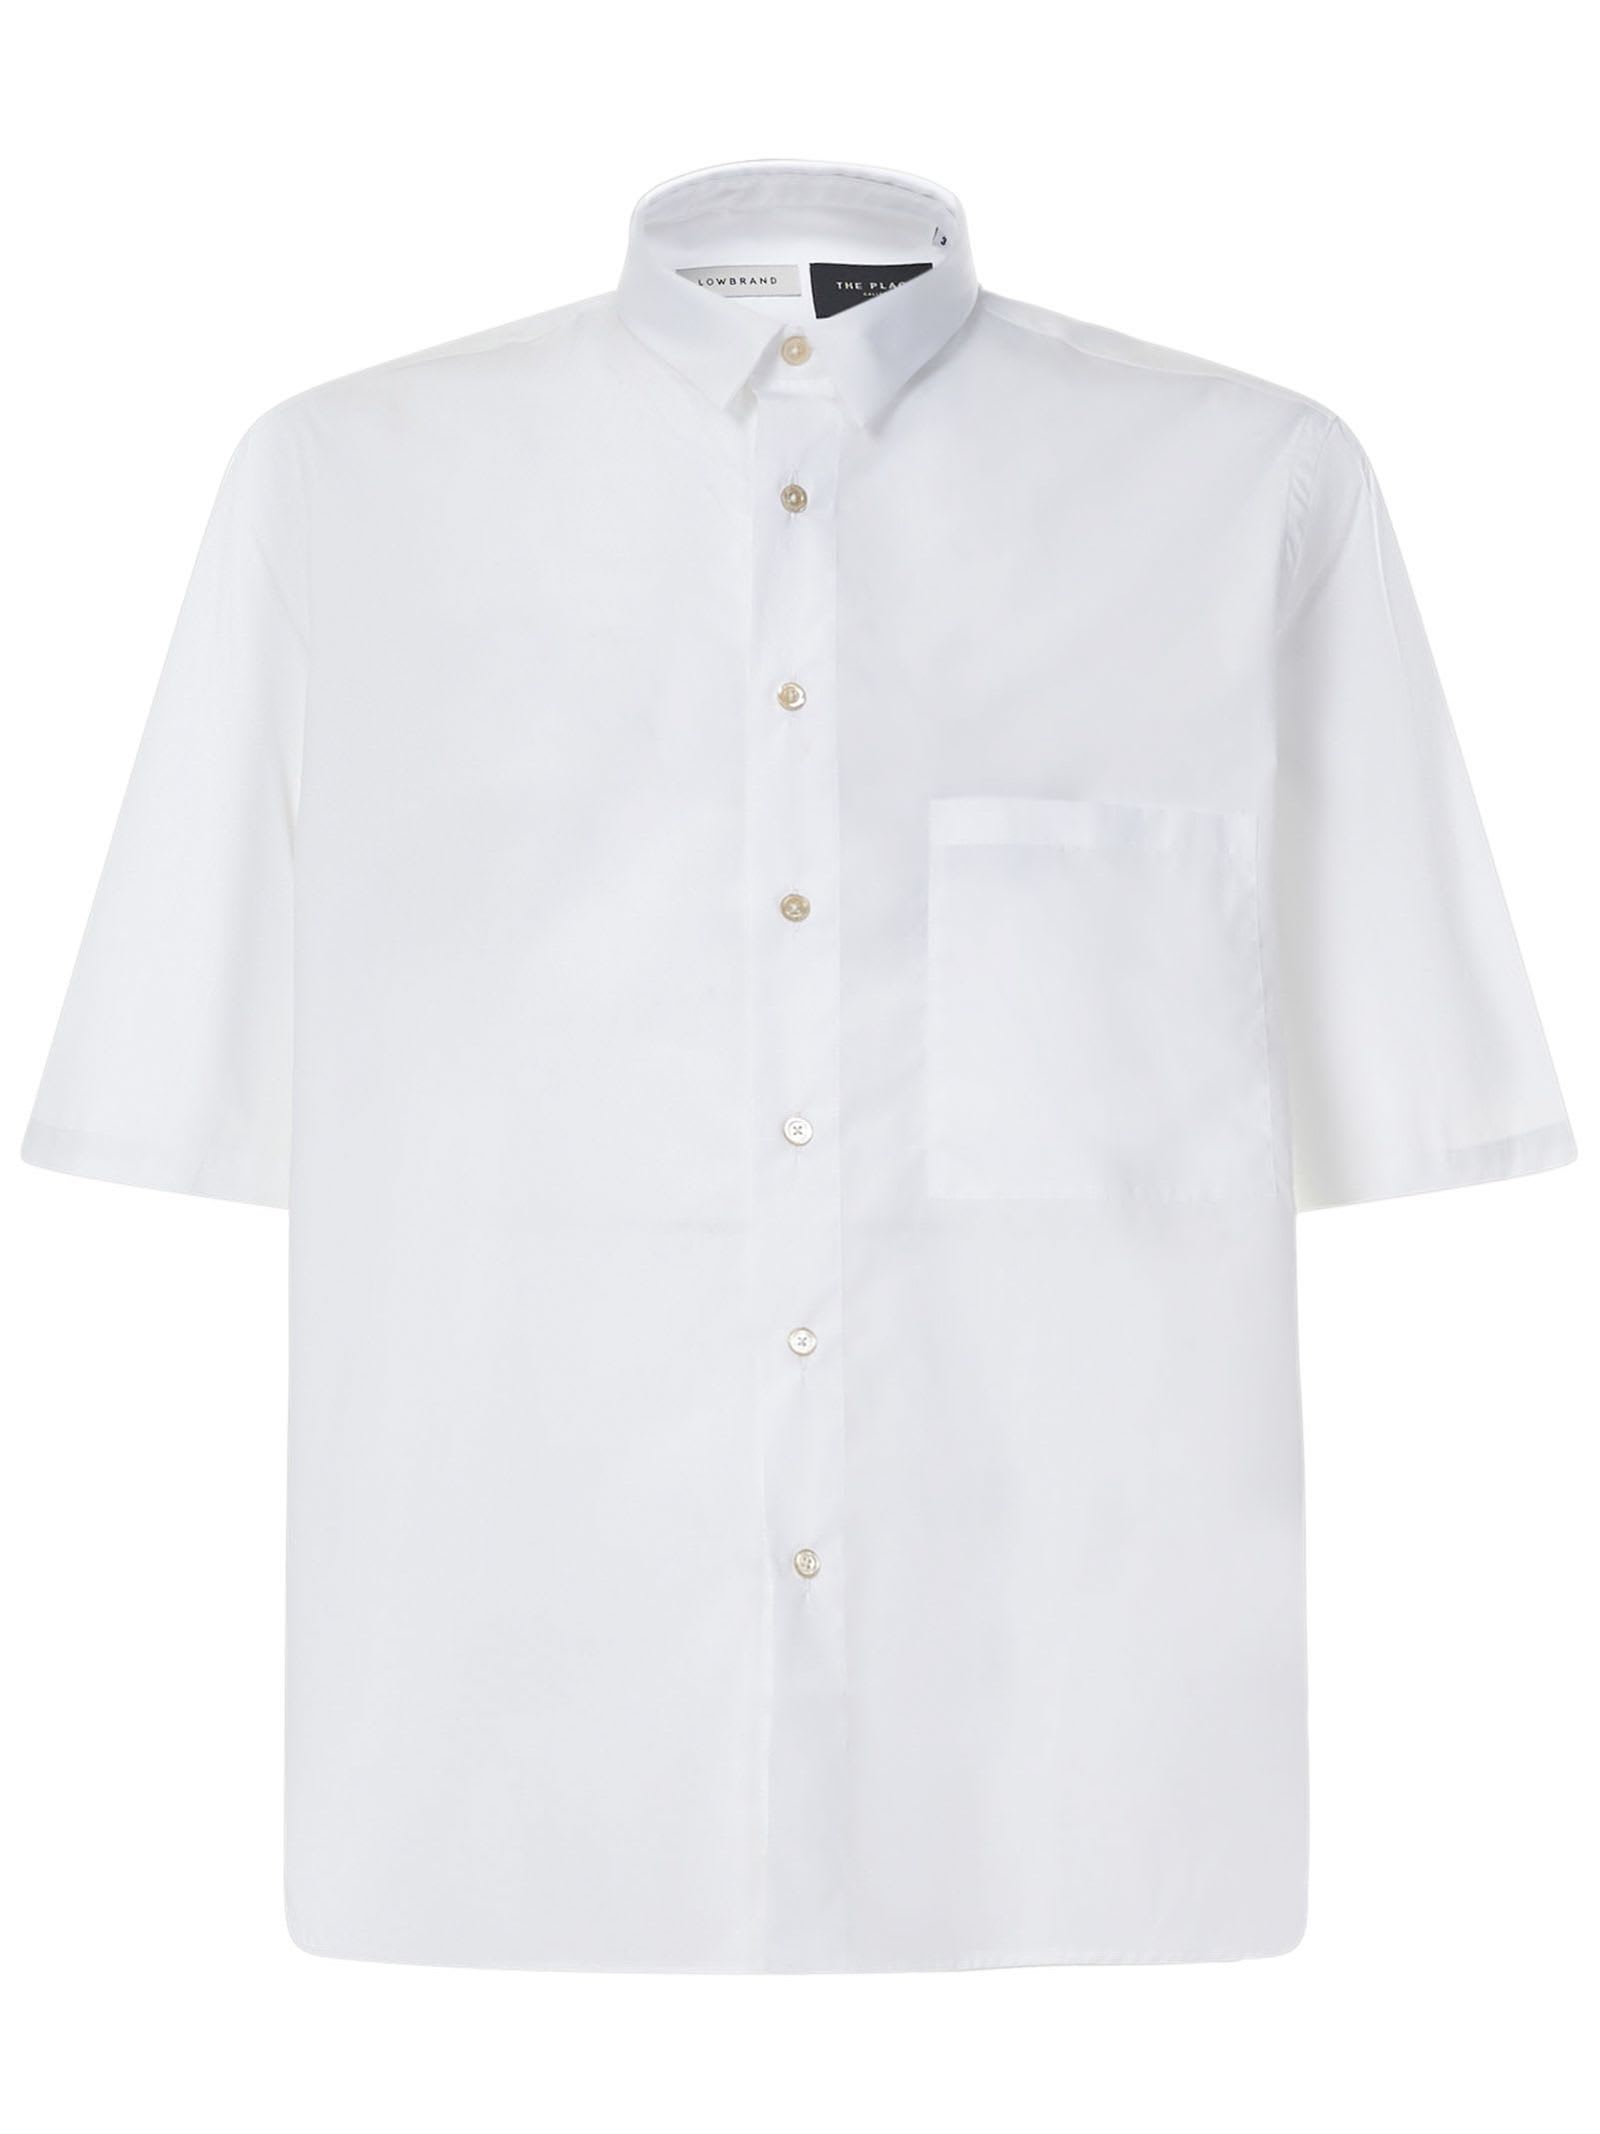 Low Brand White Cotton Shirt